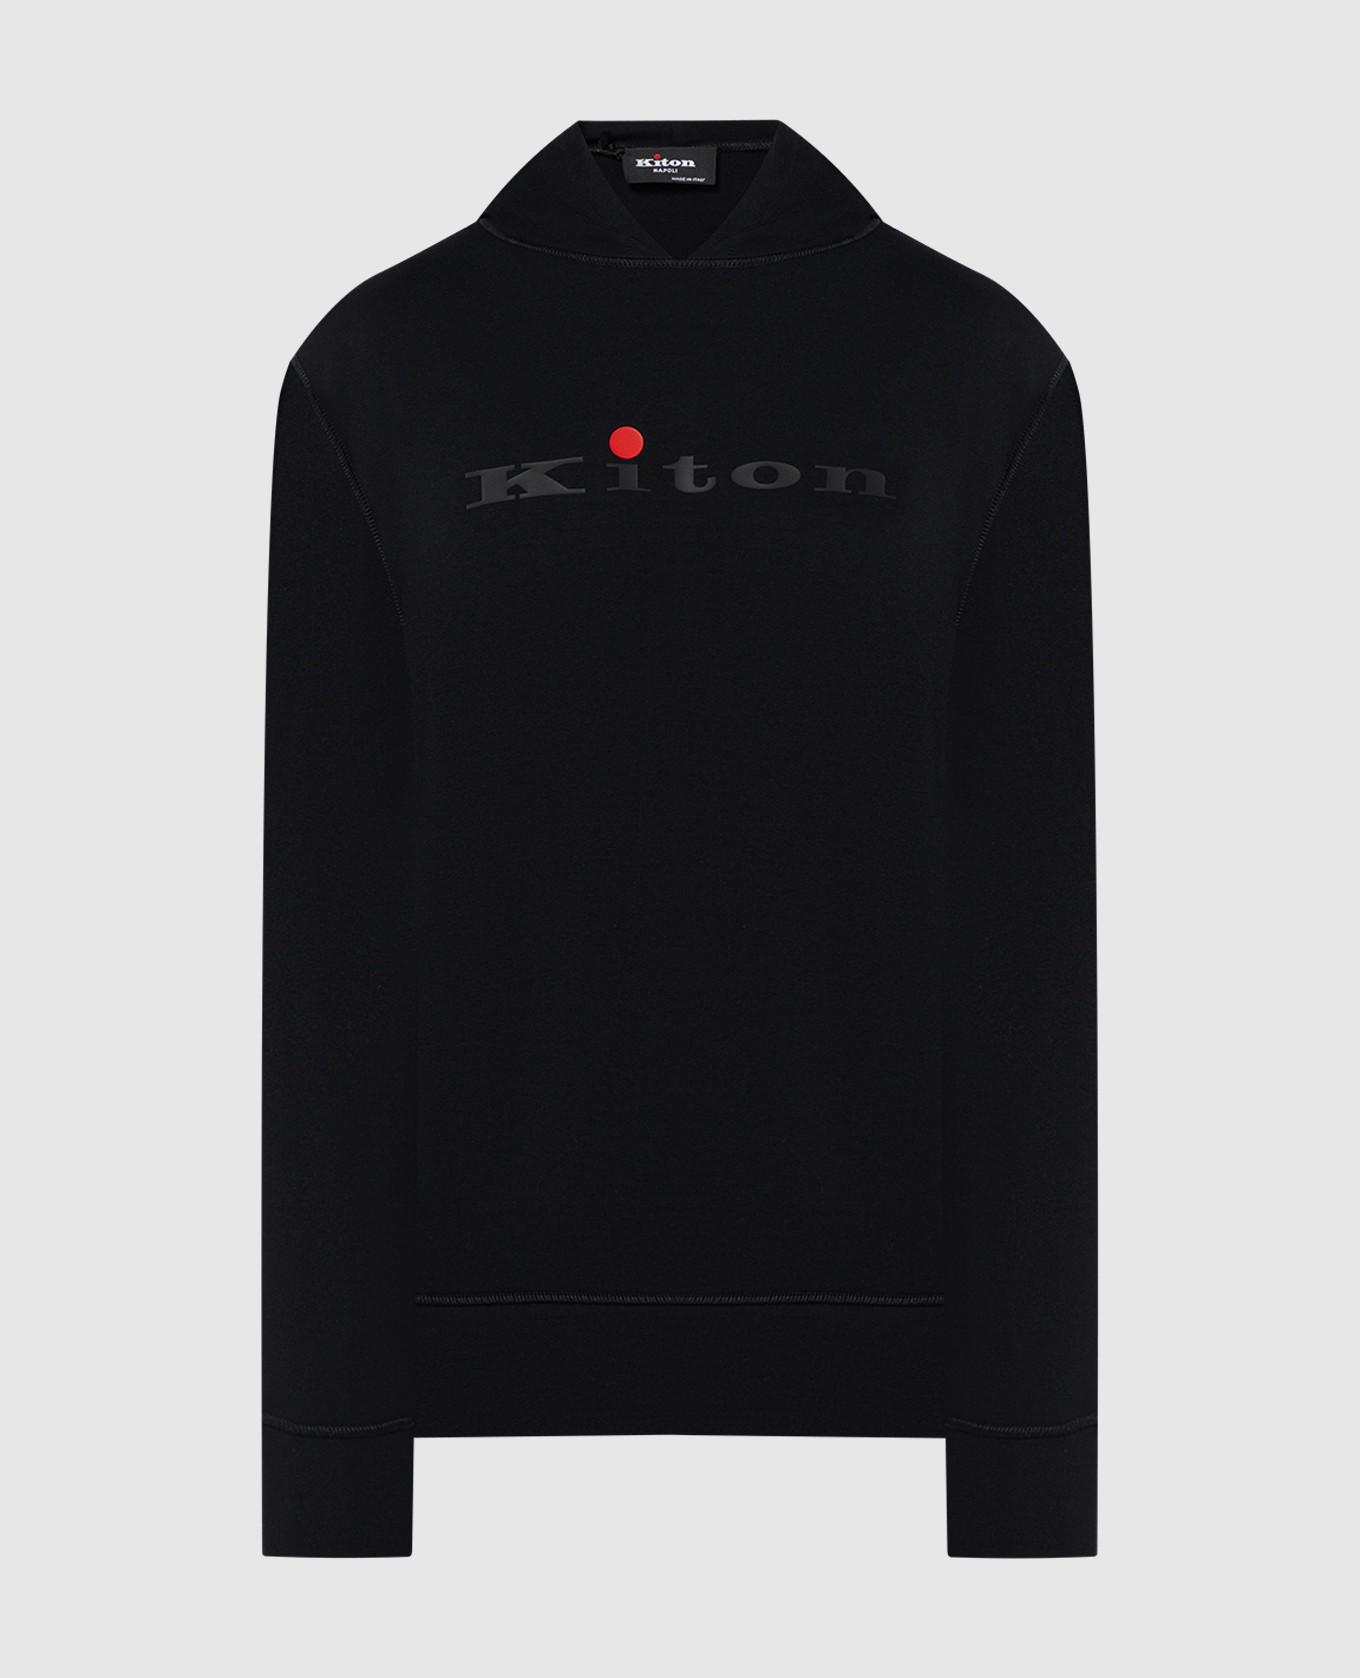 Black hoodie with textured logo print